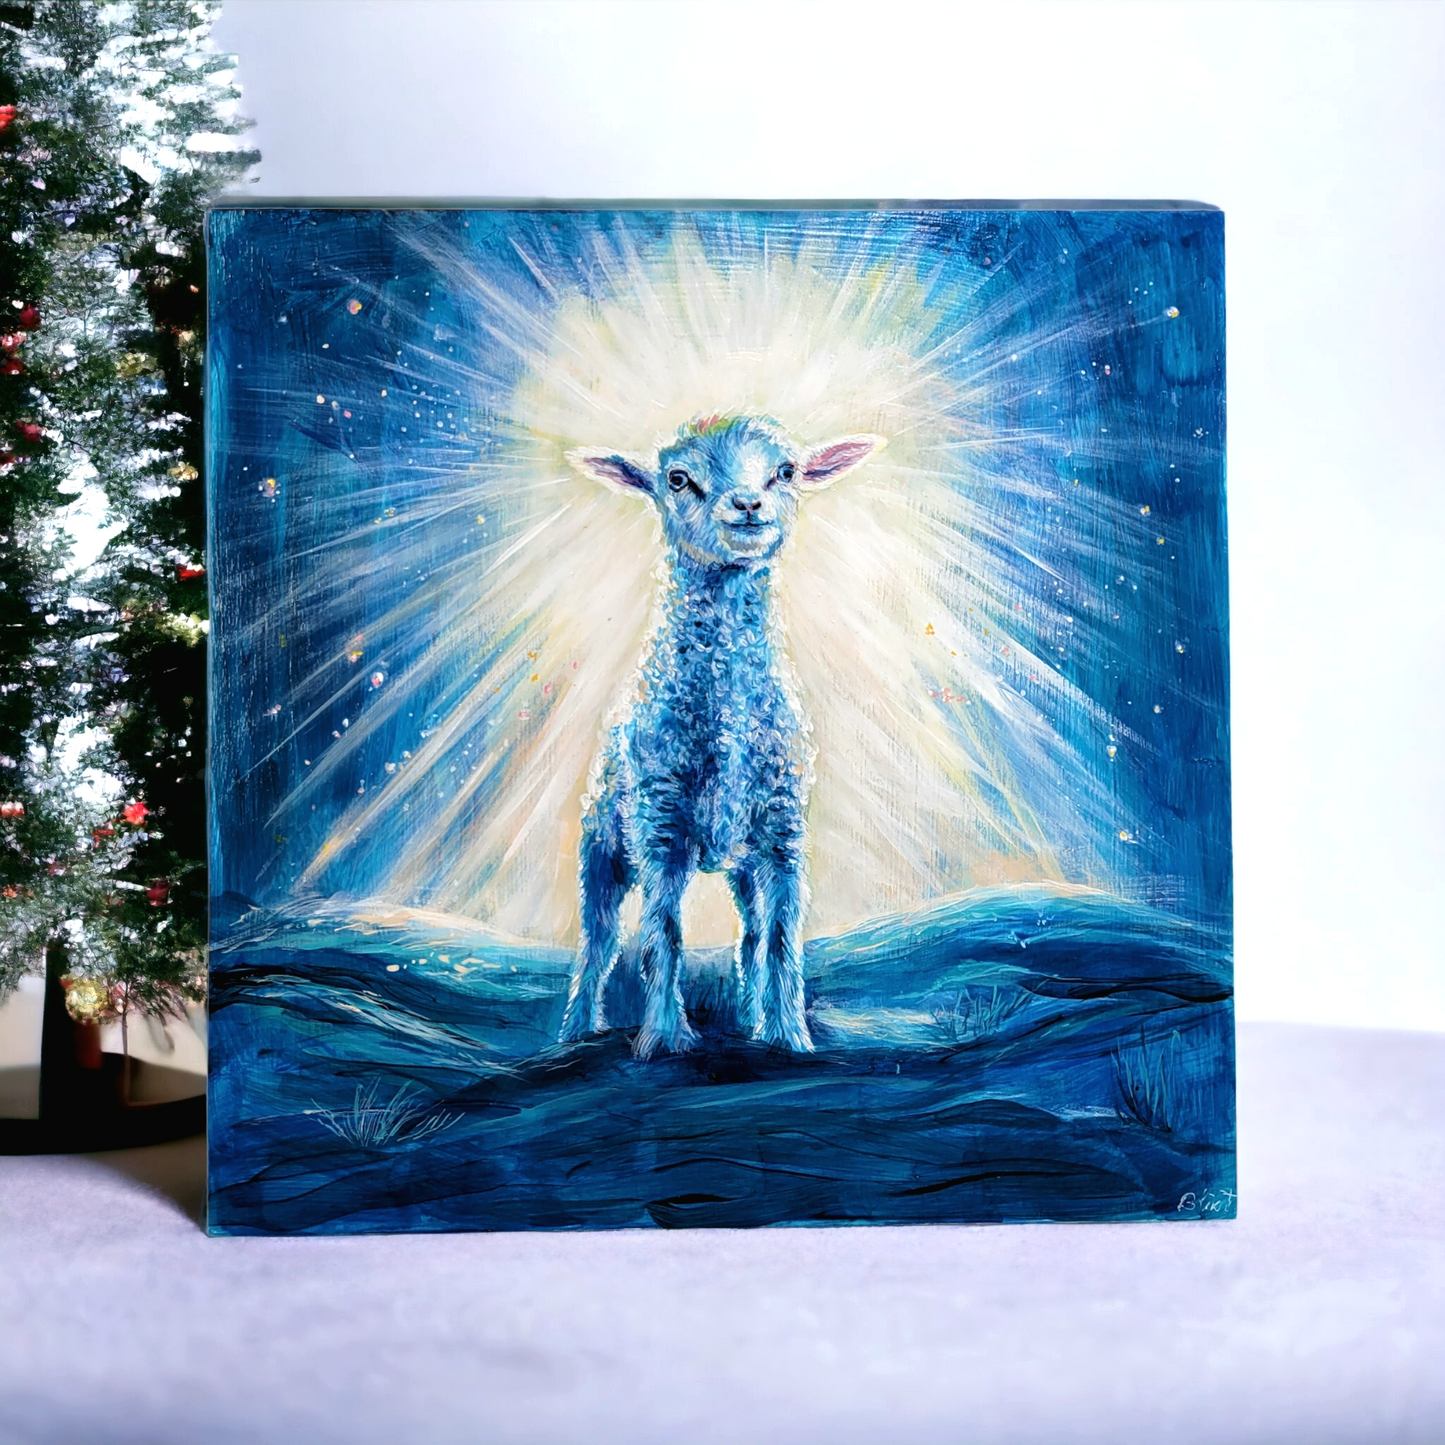 The Lamb of God- original artwork and prints